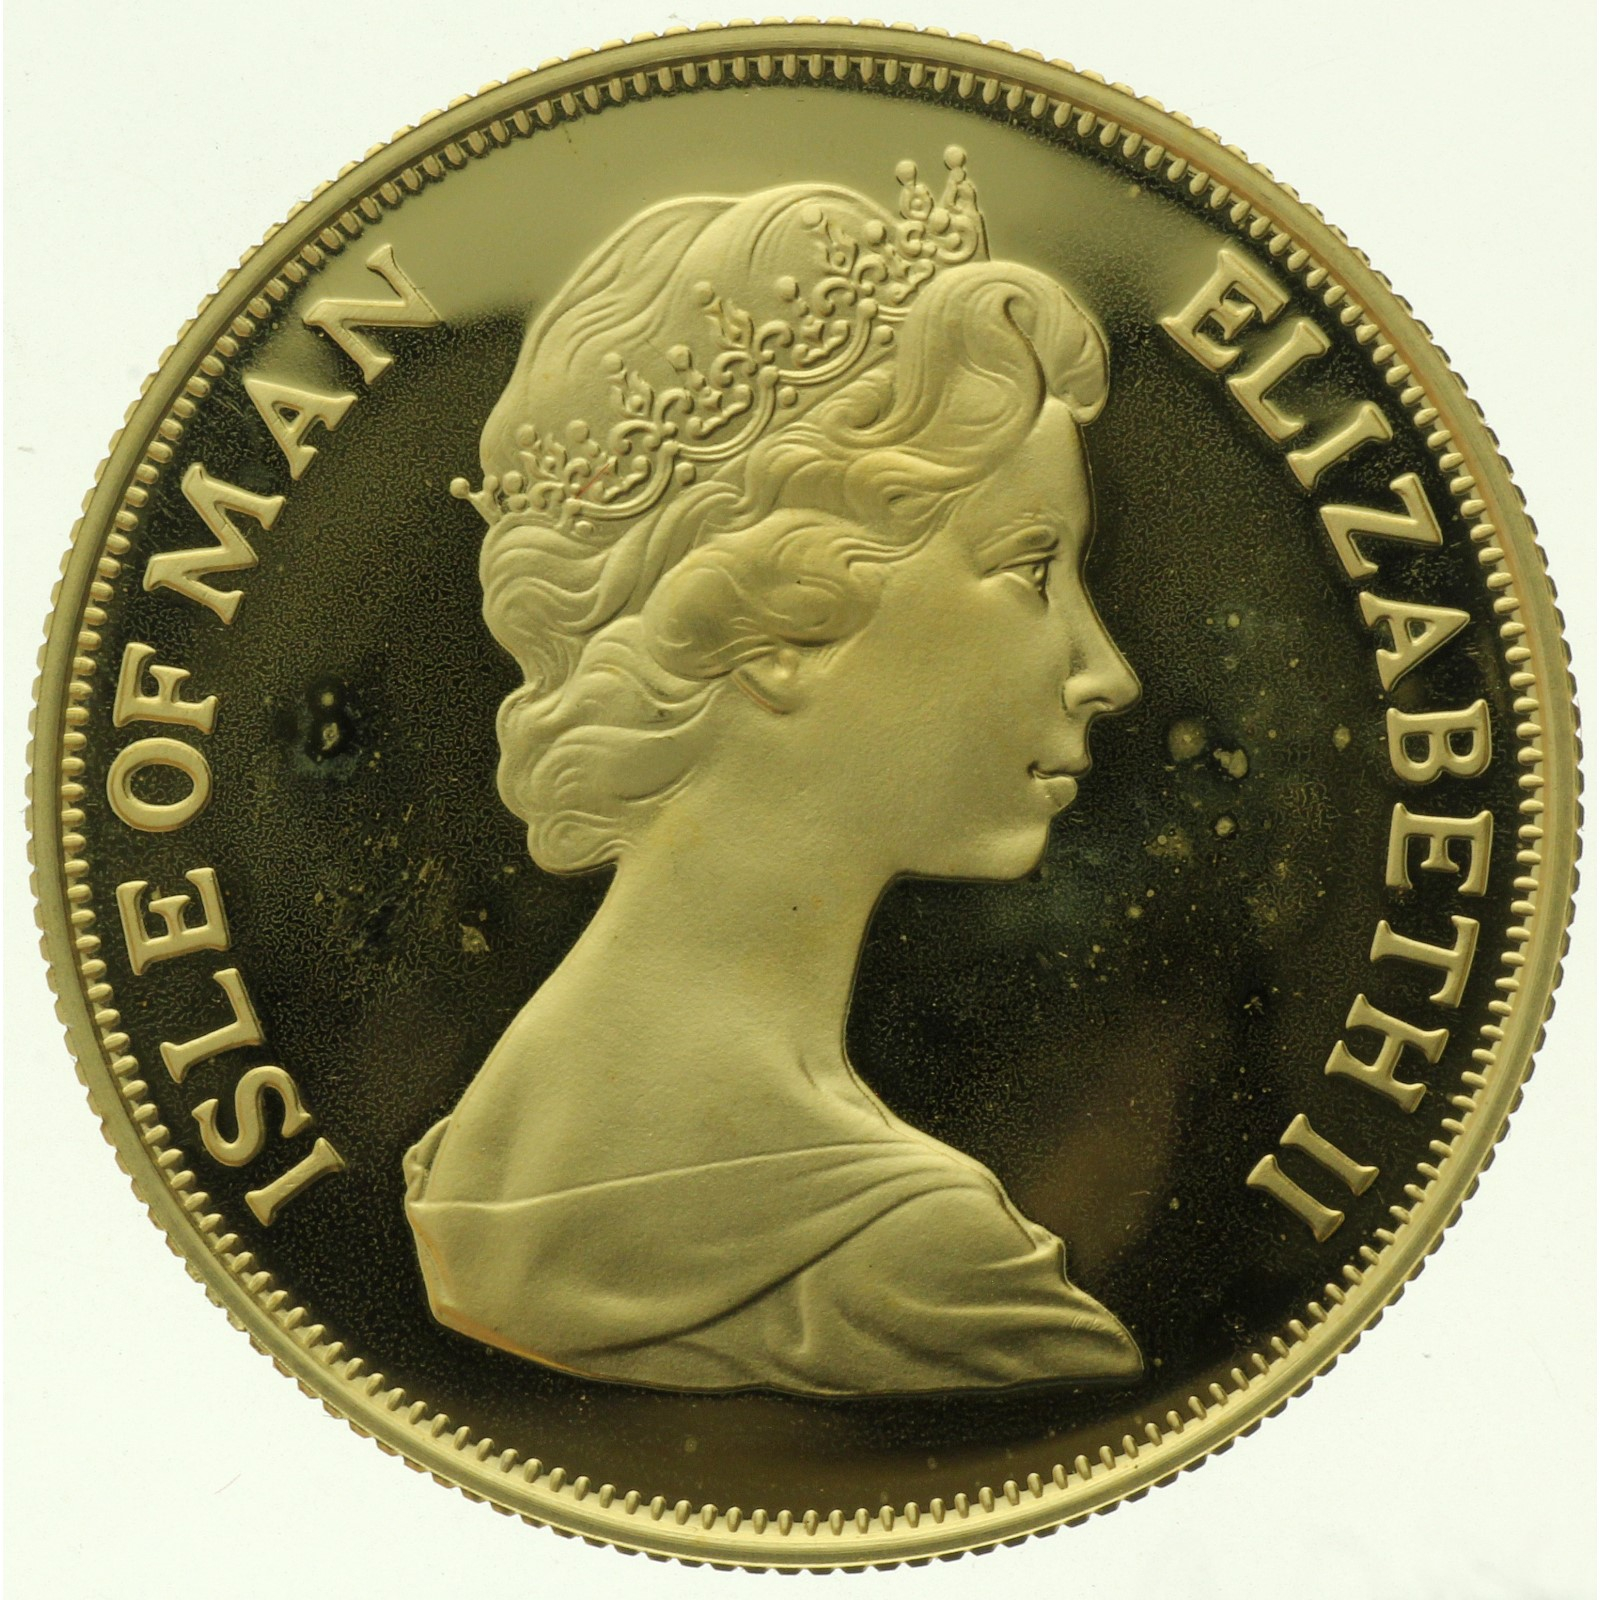 Isle of man - 2 pounds - 1979 - Elizabeth II